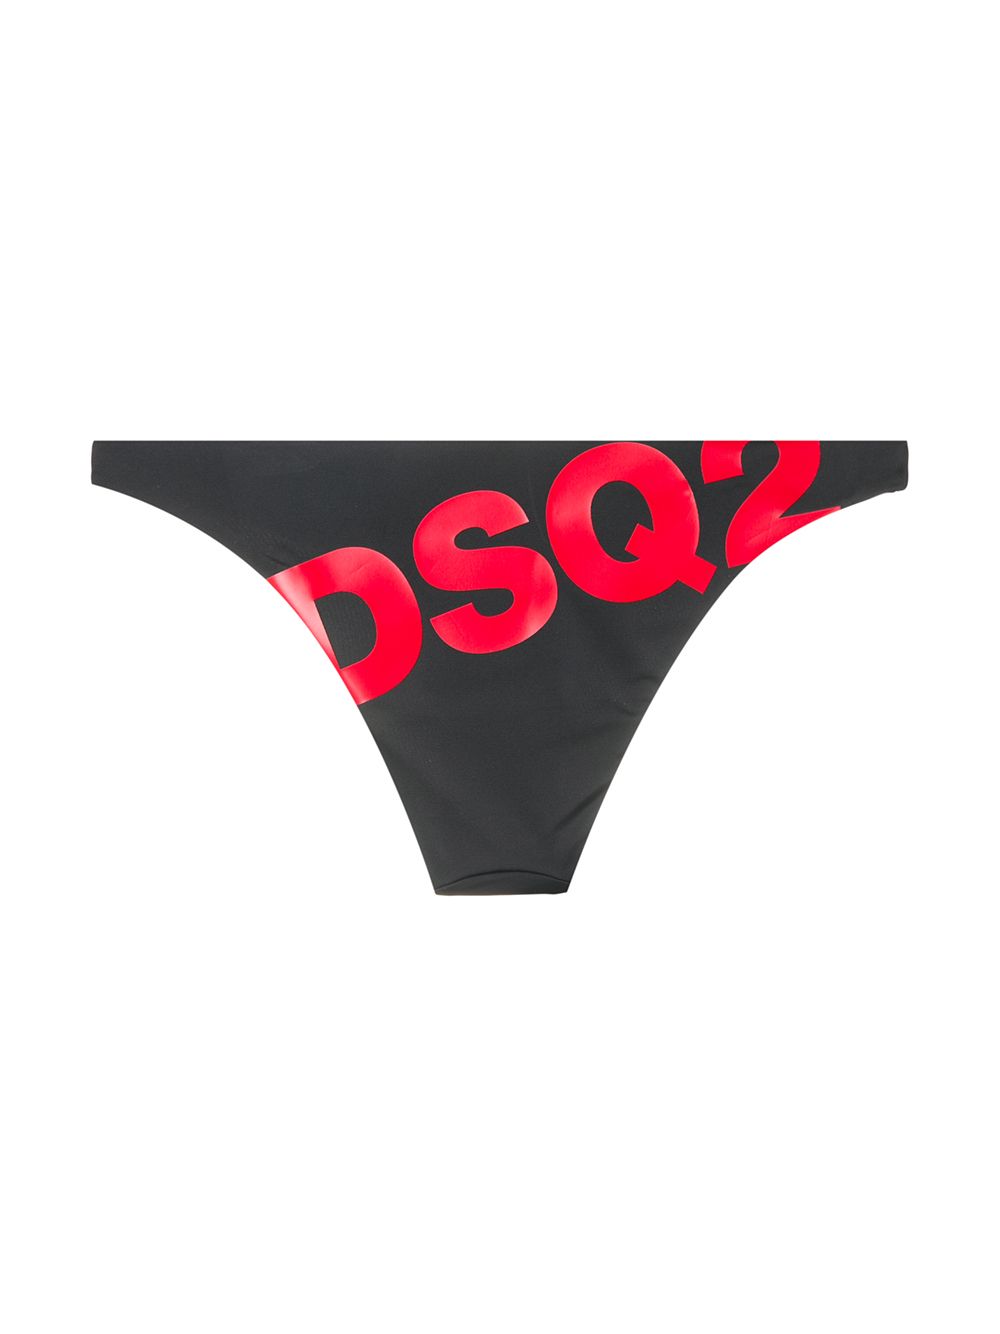 фото Dsquared2 плавки бикини с логотипом сзади